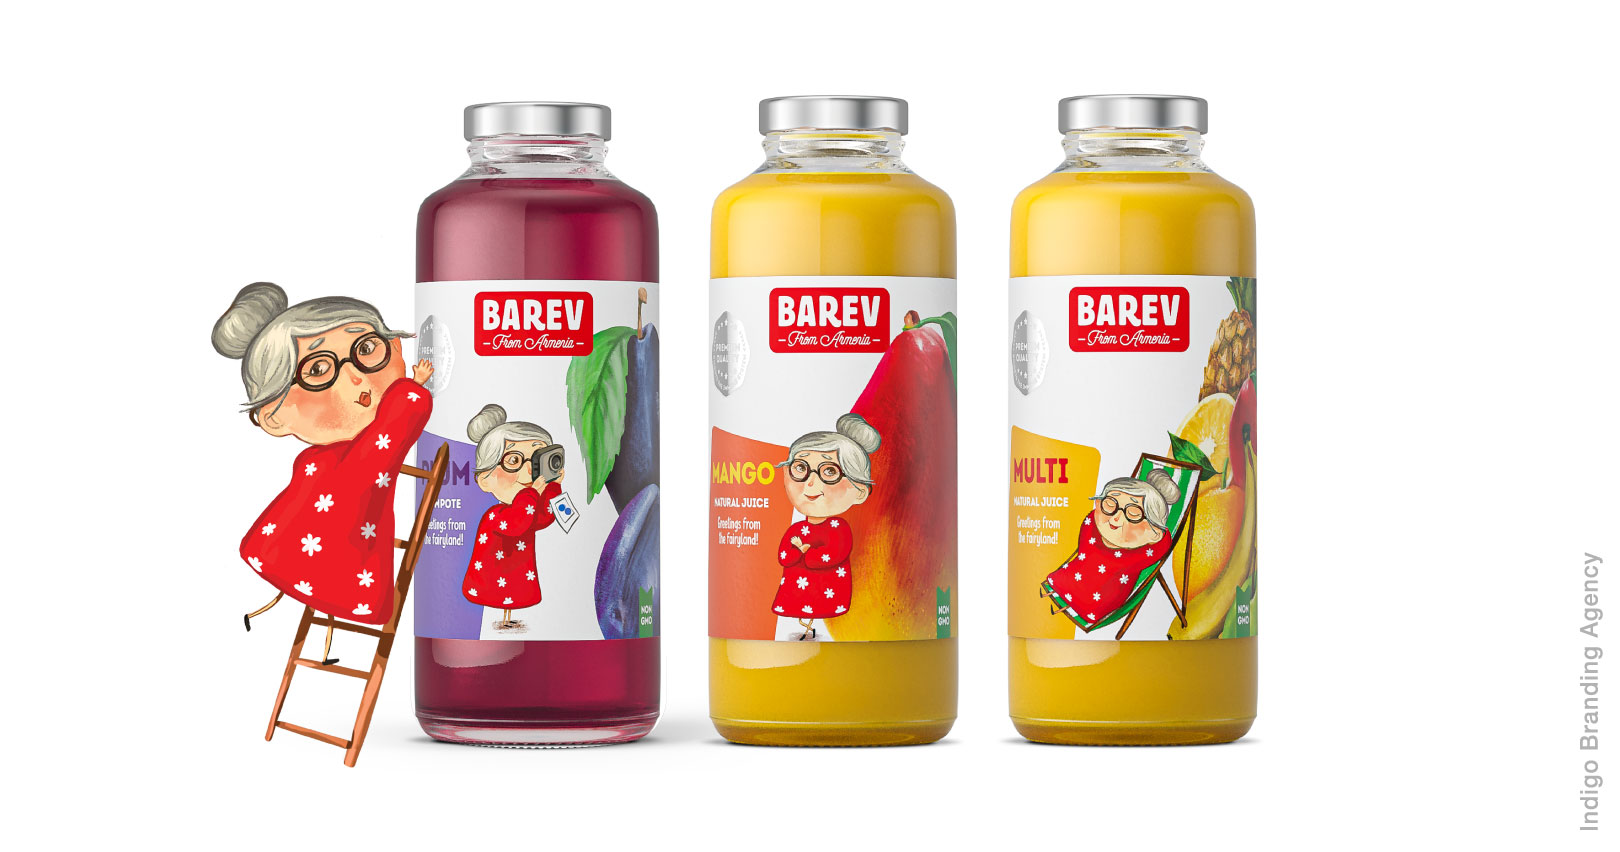 Barev Armenia jams preserves juices branding and packaging design for Hayasy Group by Indigo Branding